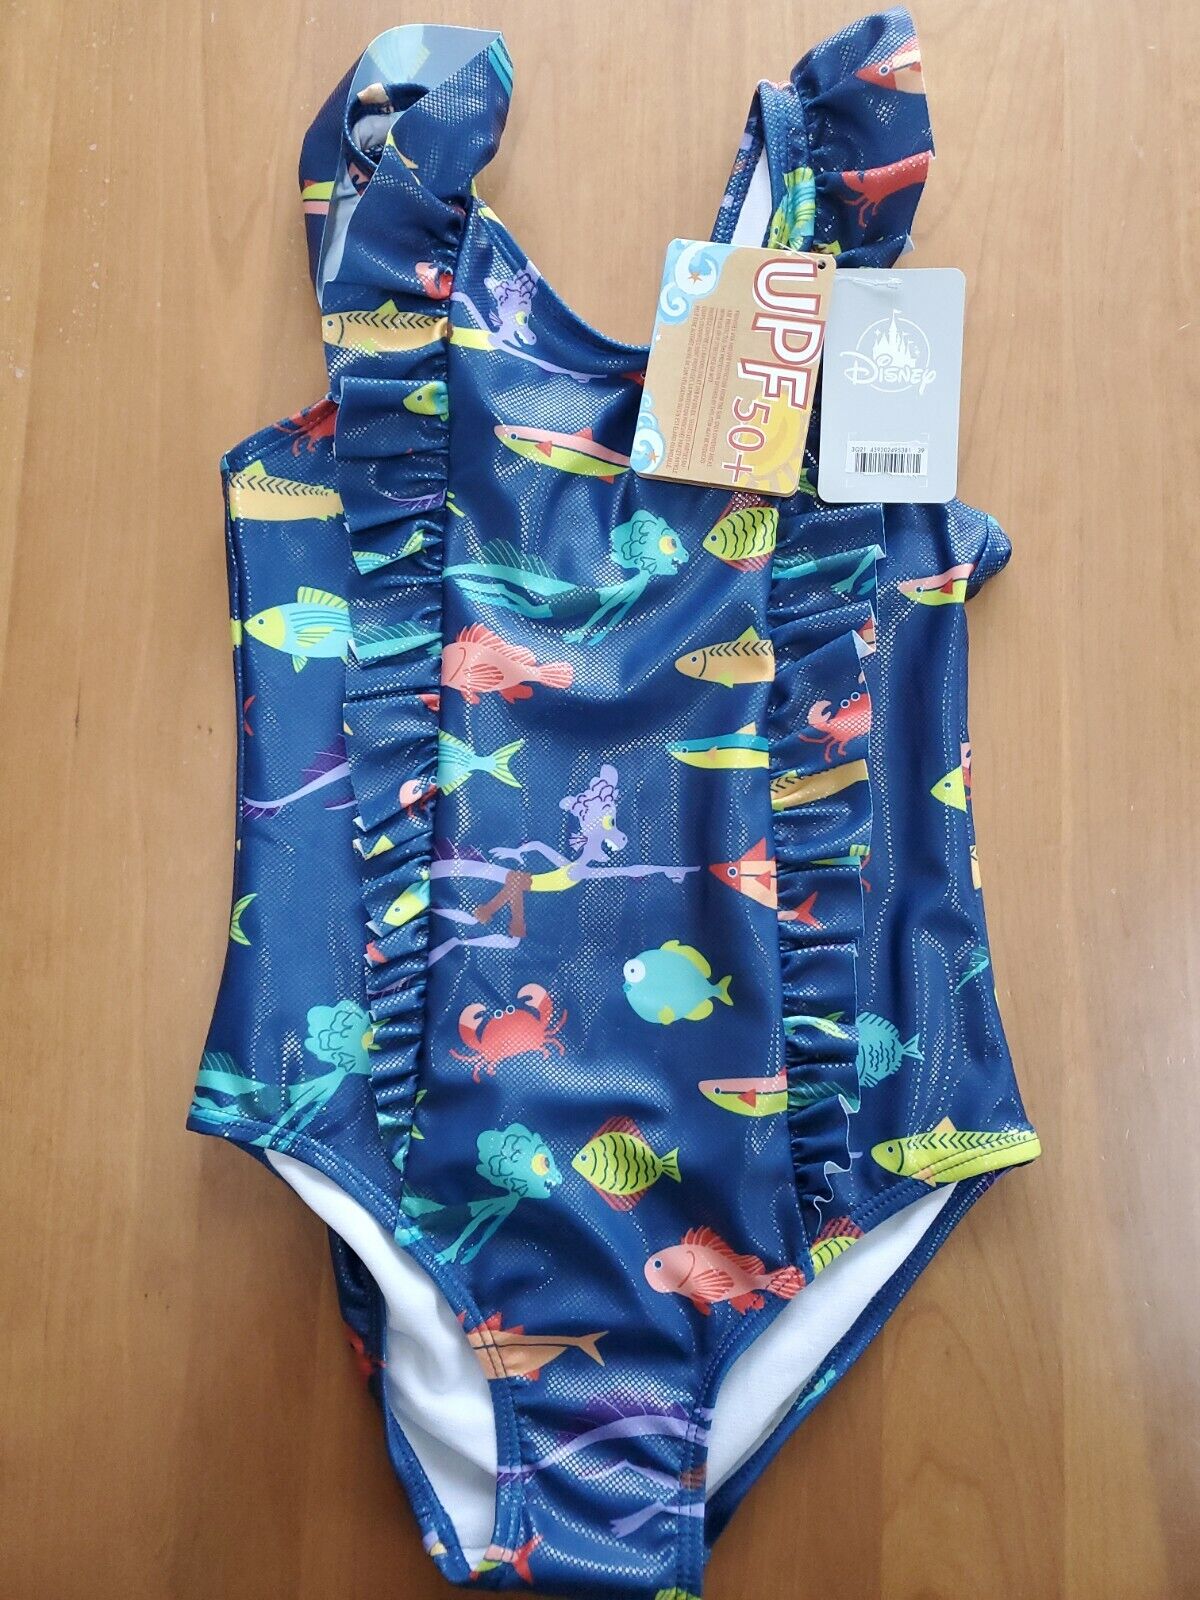 Disney Store Girls LUCA One Piece Swimsuit -Sealife Print - Blue - Size 9-10 New